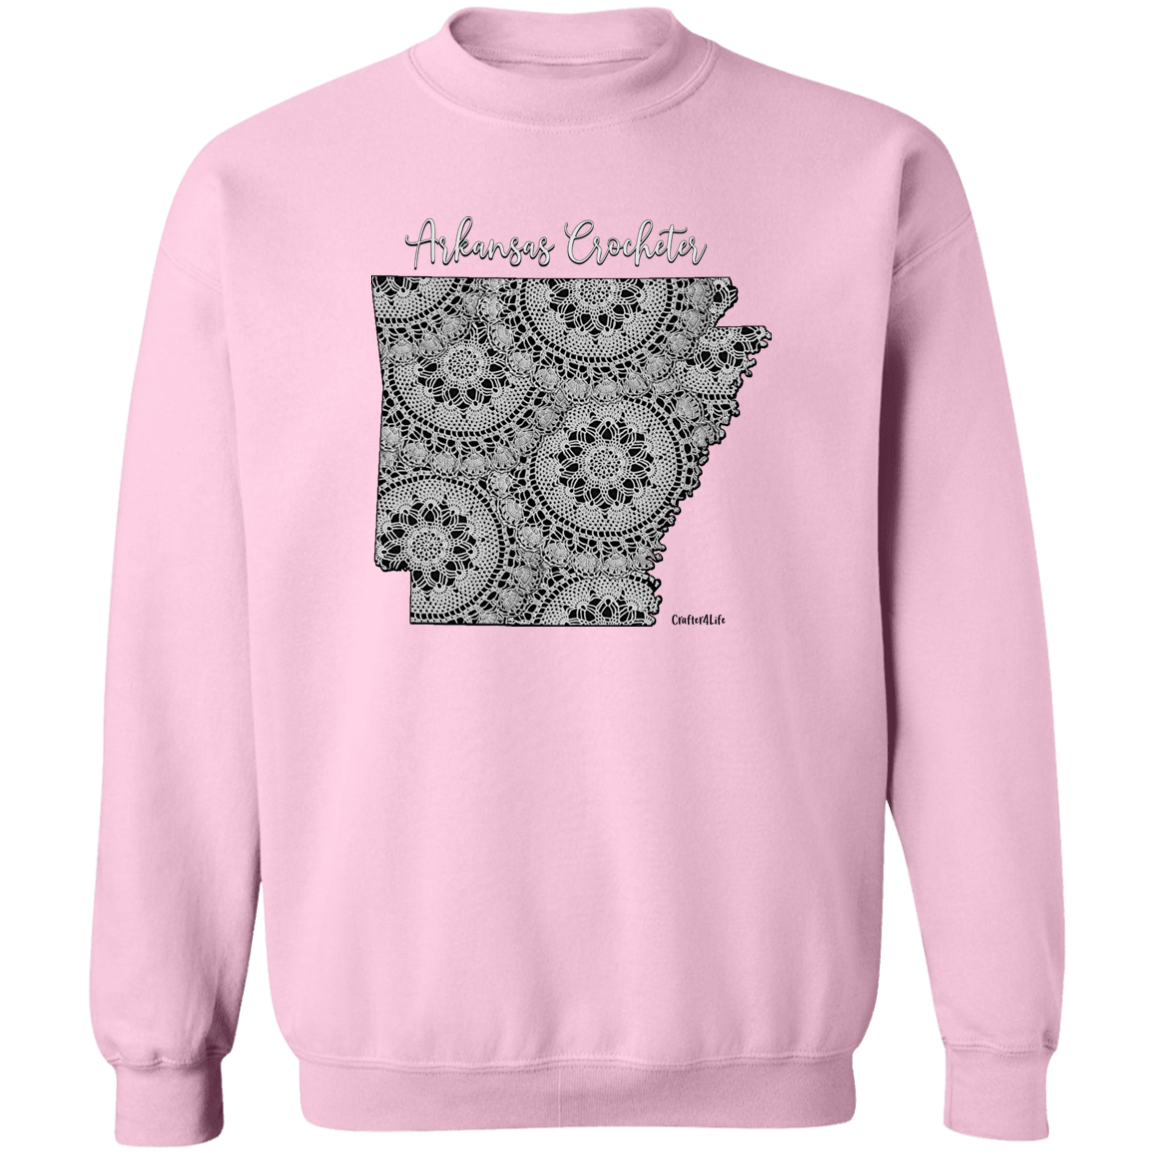 Arkansas Crocheter Crewneck Pullover Sweatshirt